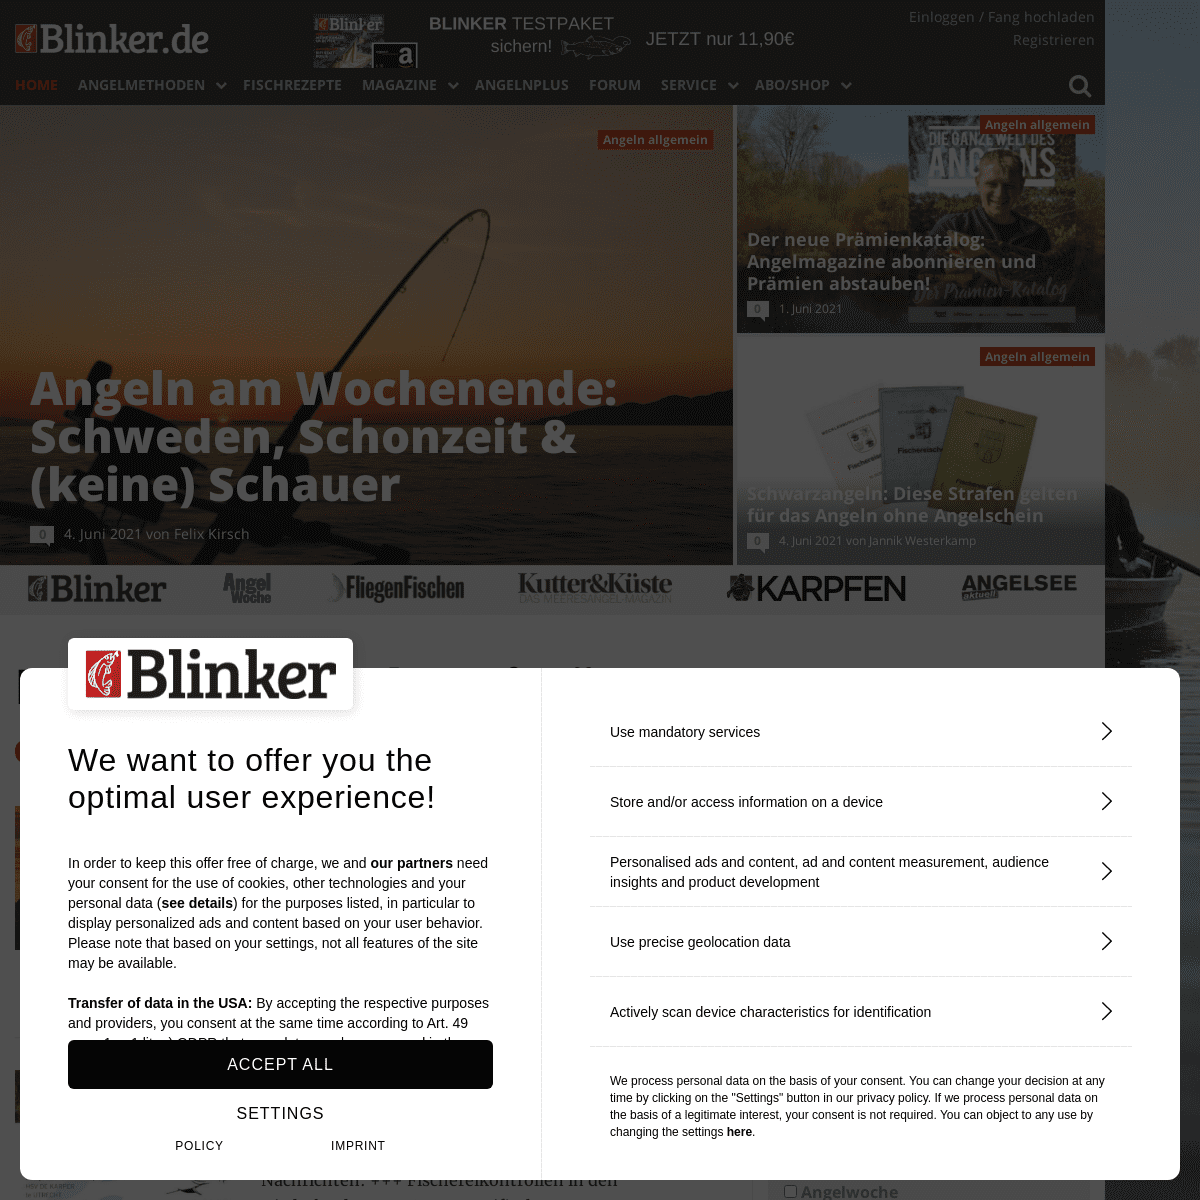 A complete backup of https://blinker.de